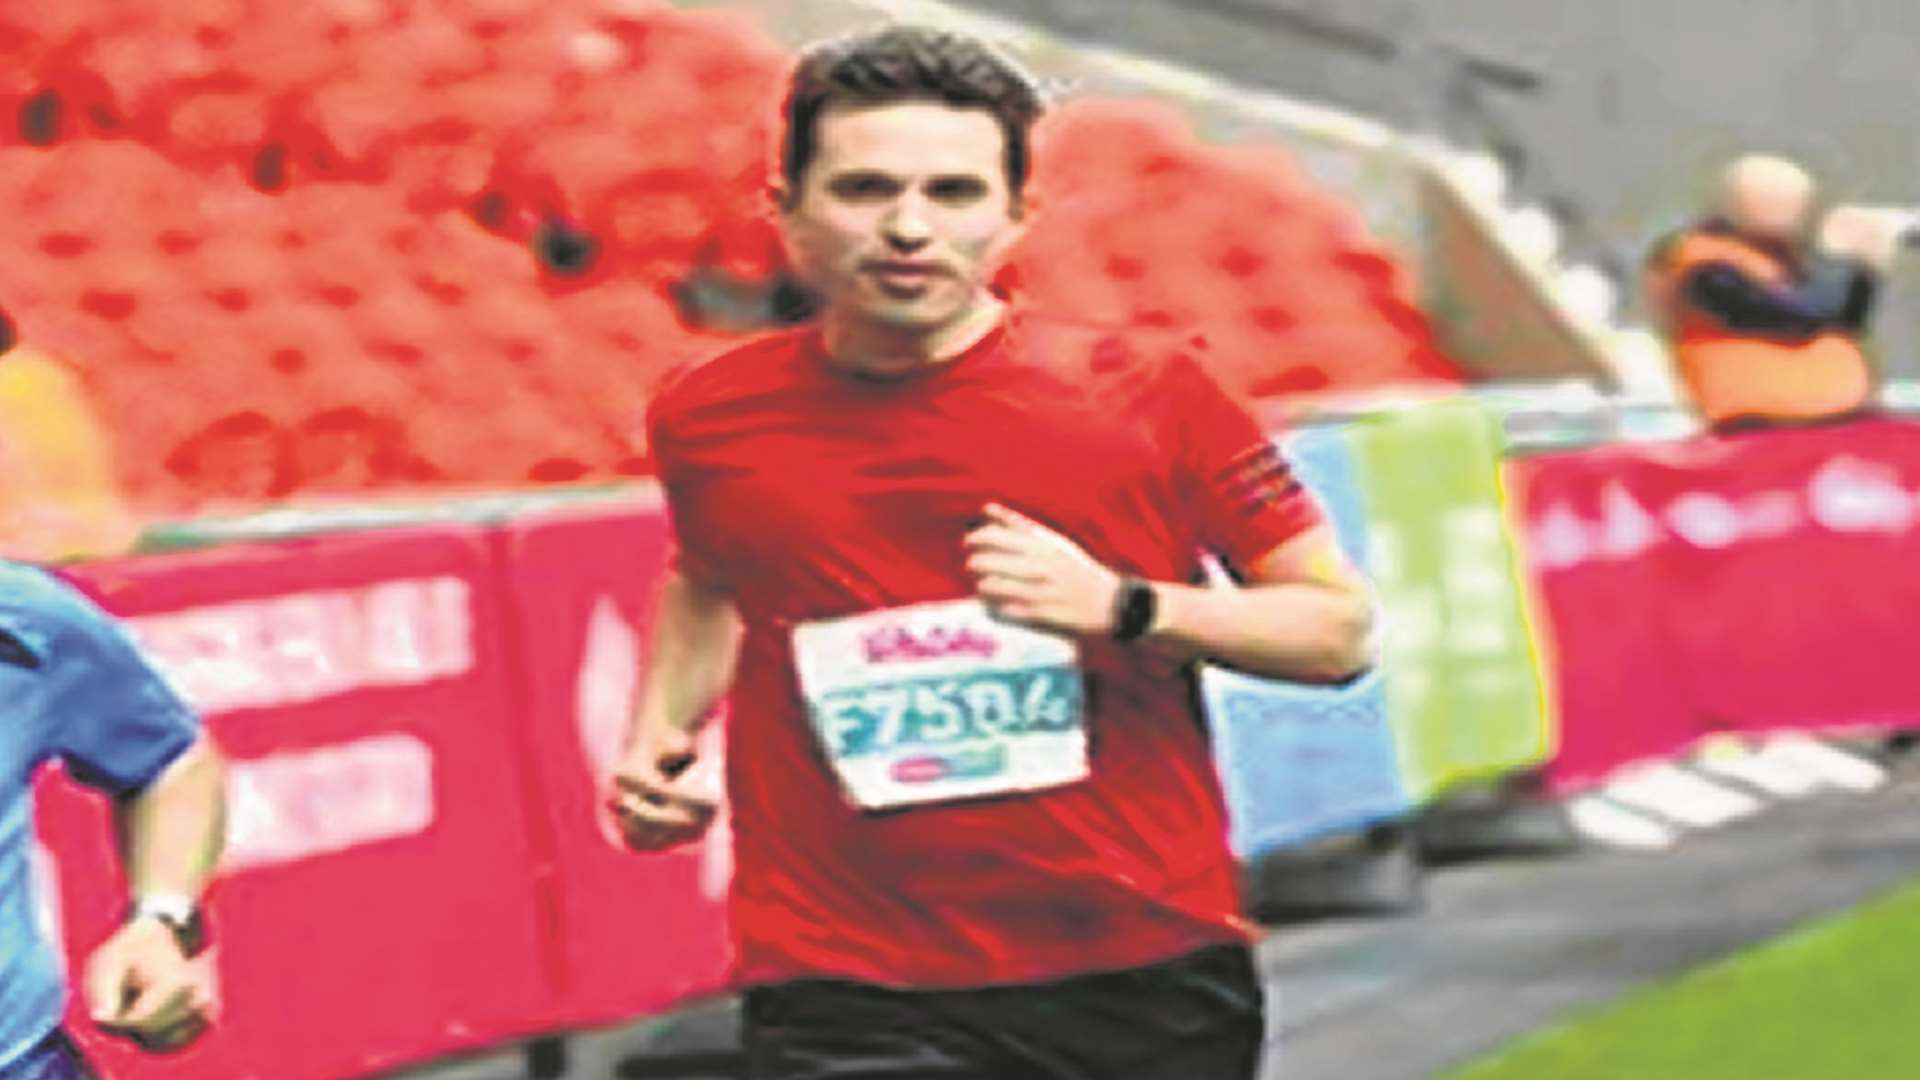 Robyn Bartram will run the London Marathon for Childhood First